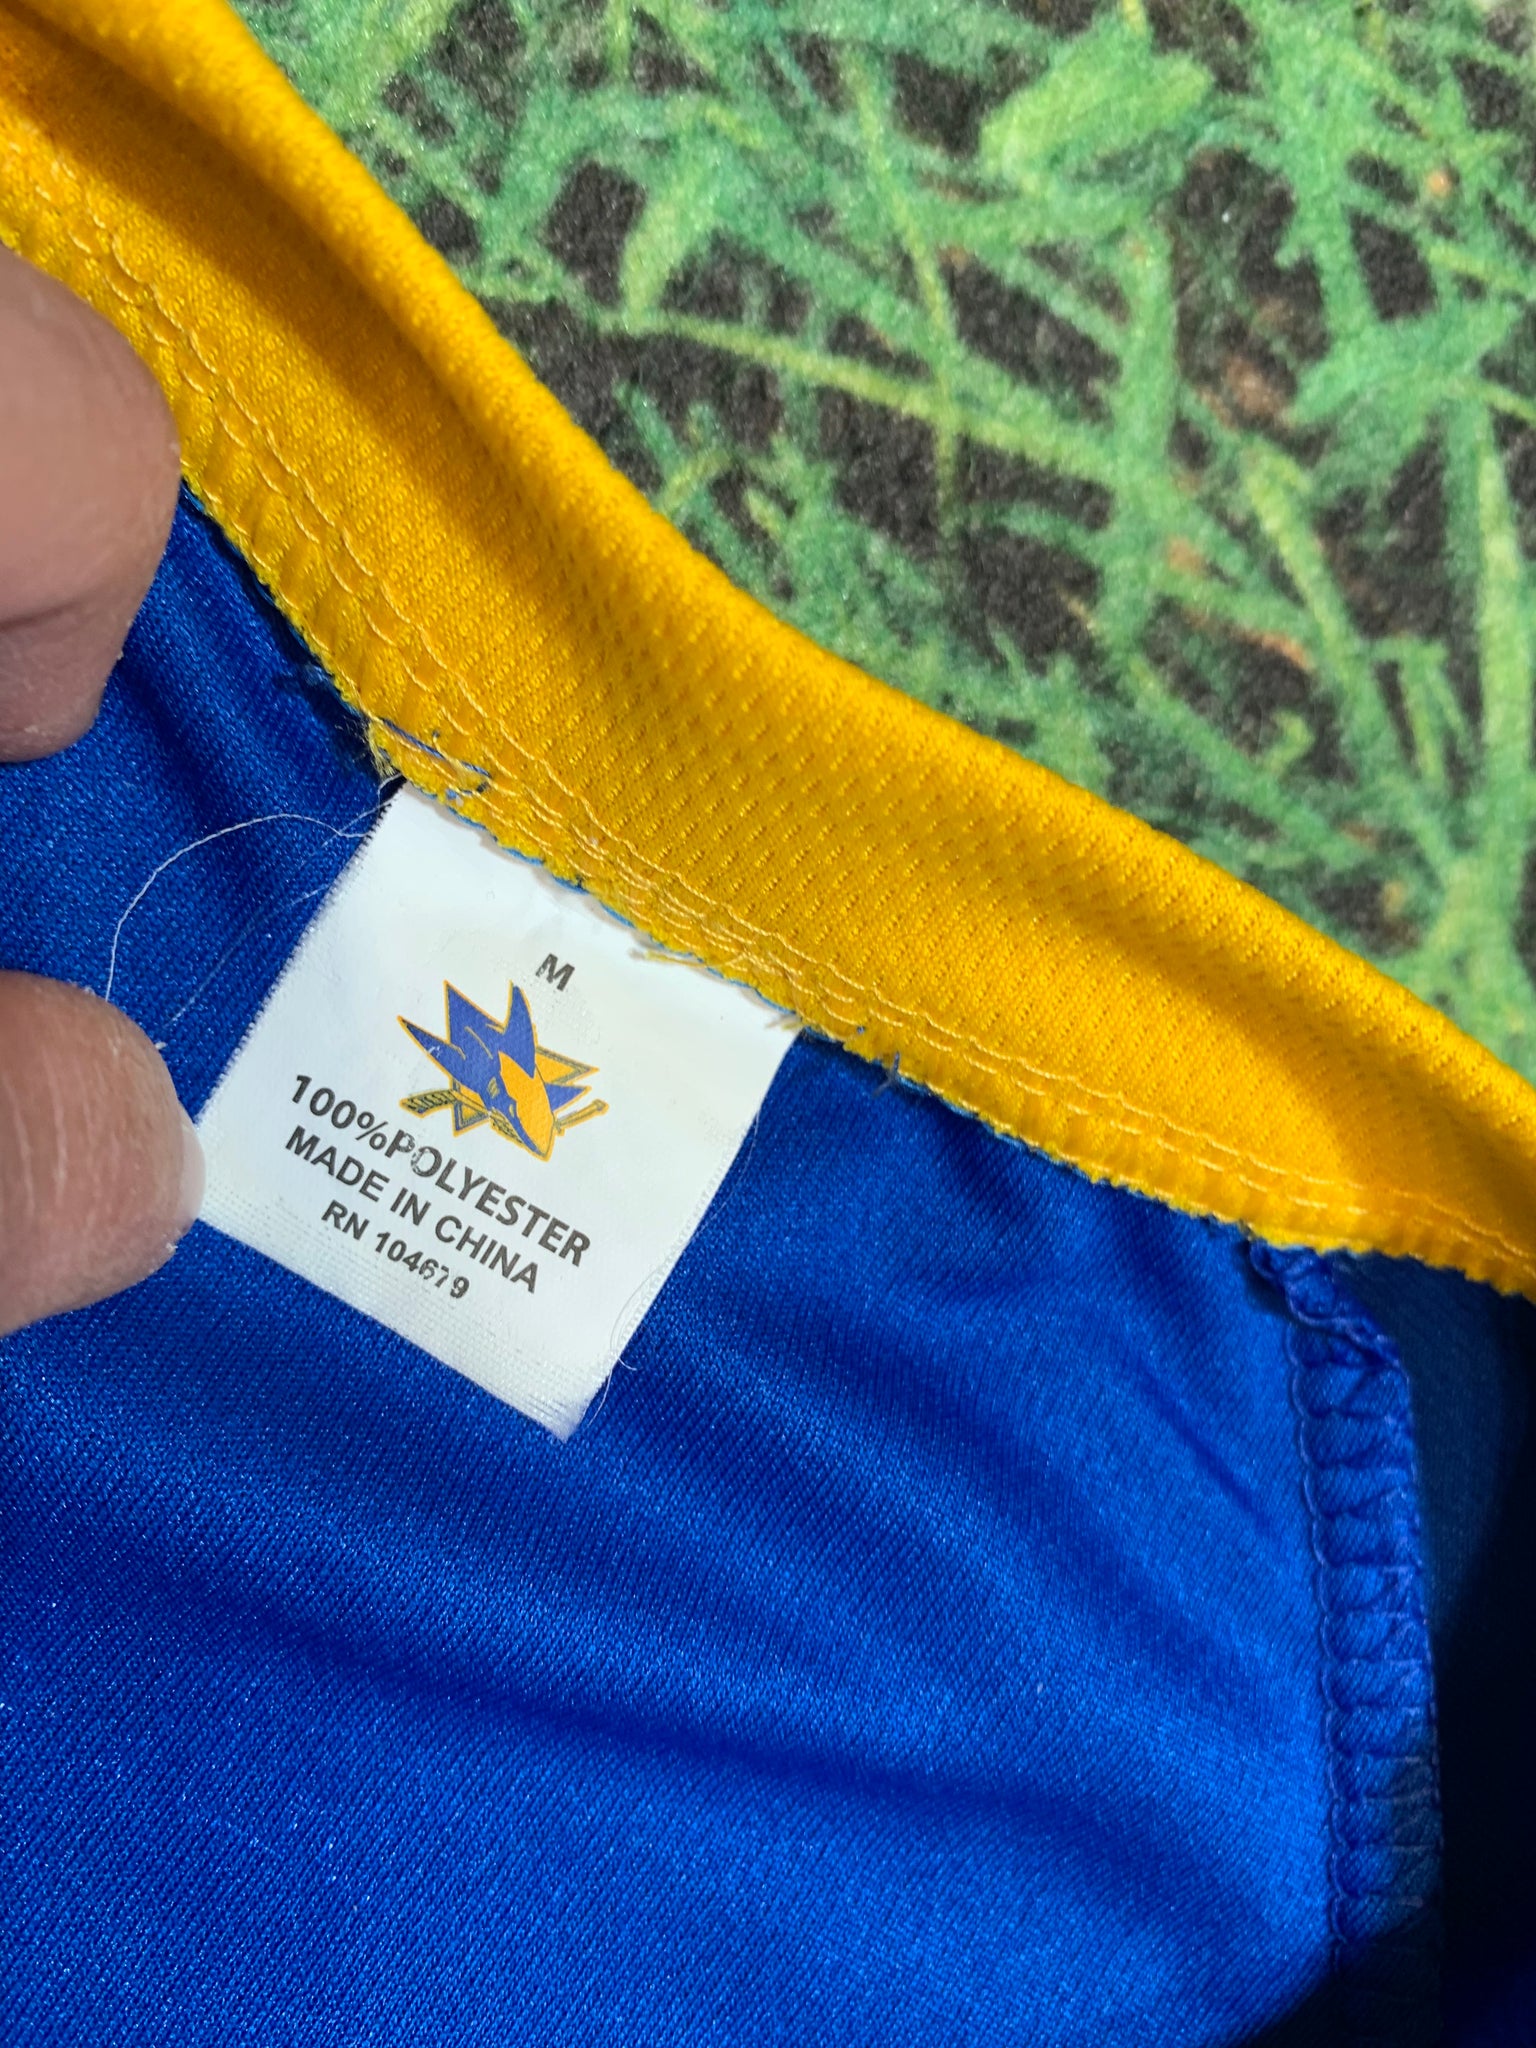 Shirts, San Jose Sharks Golden State Warriors Hockey Jersey Sz M Yellow  Blue Zoom Sga